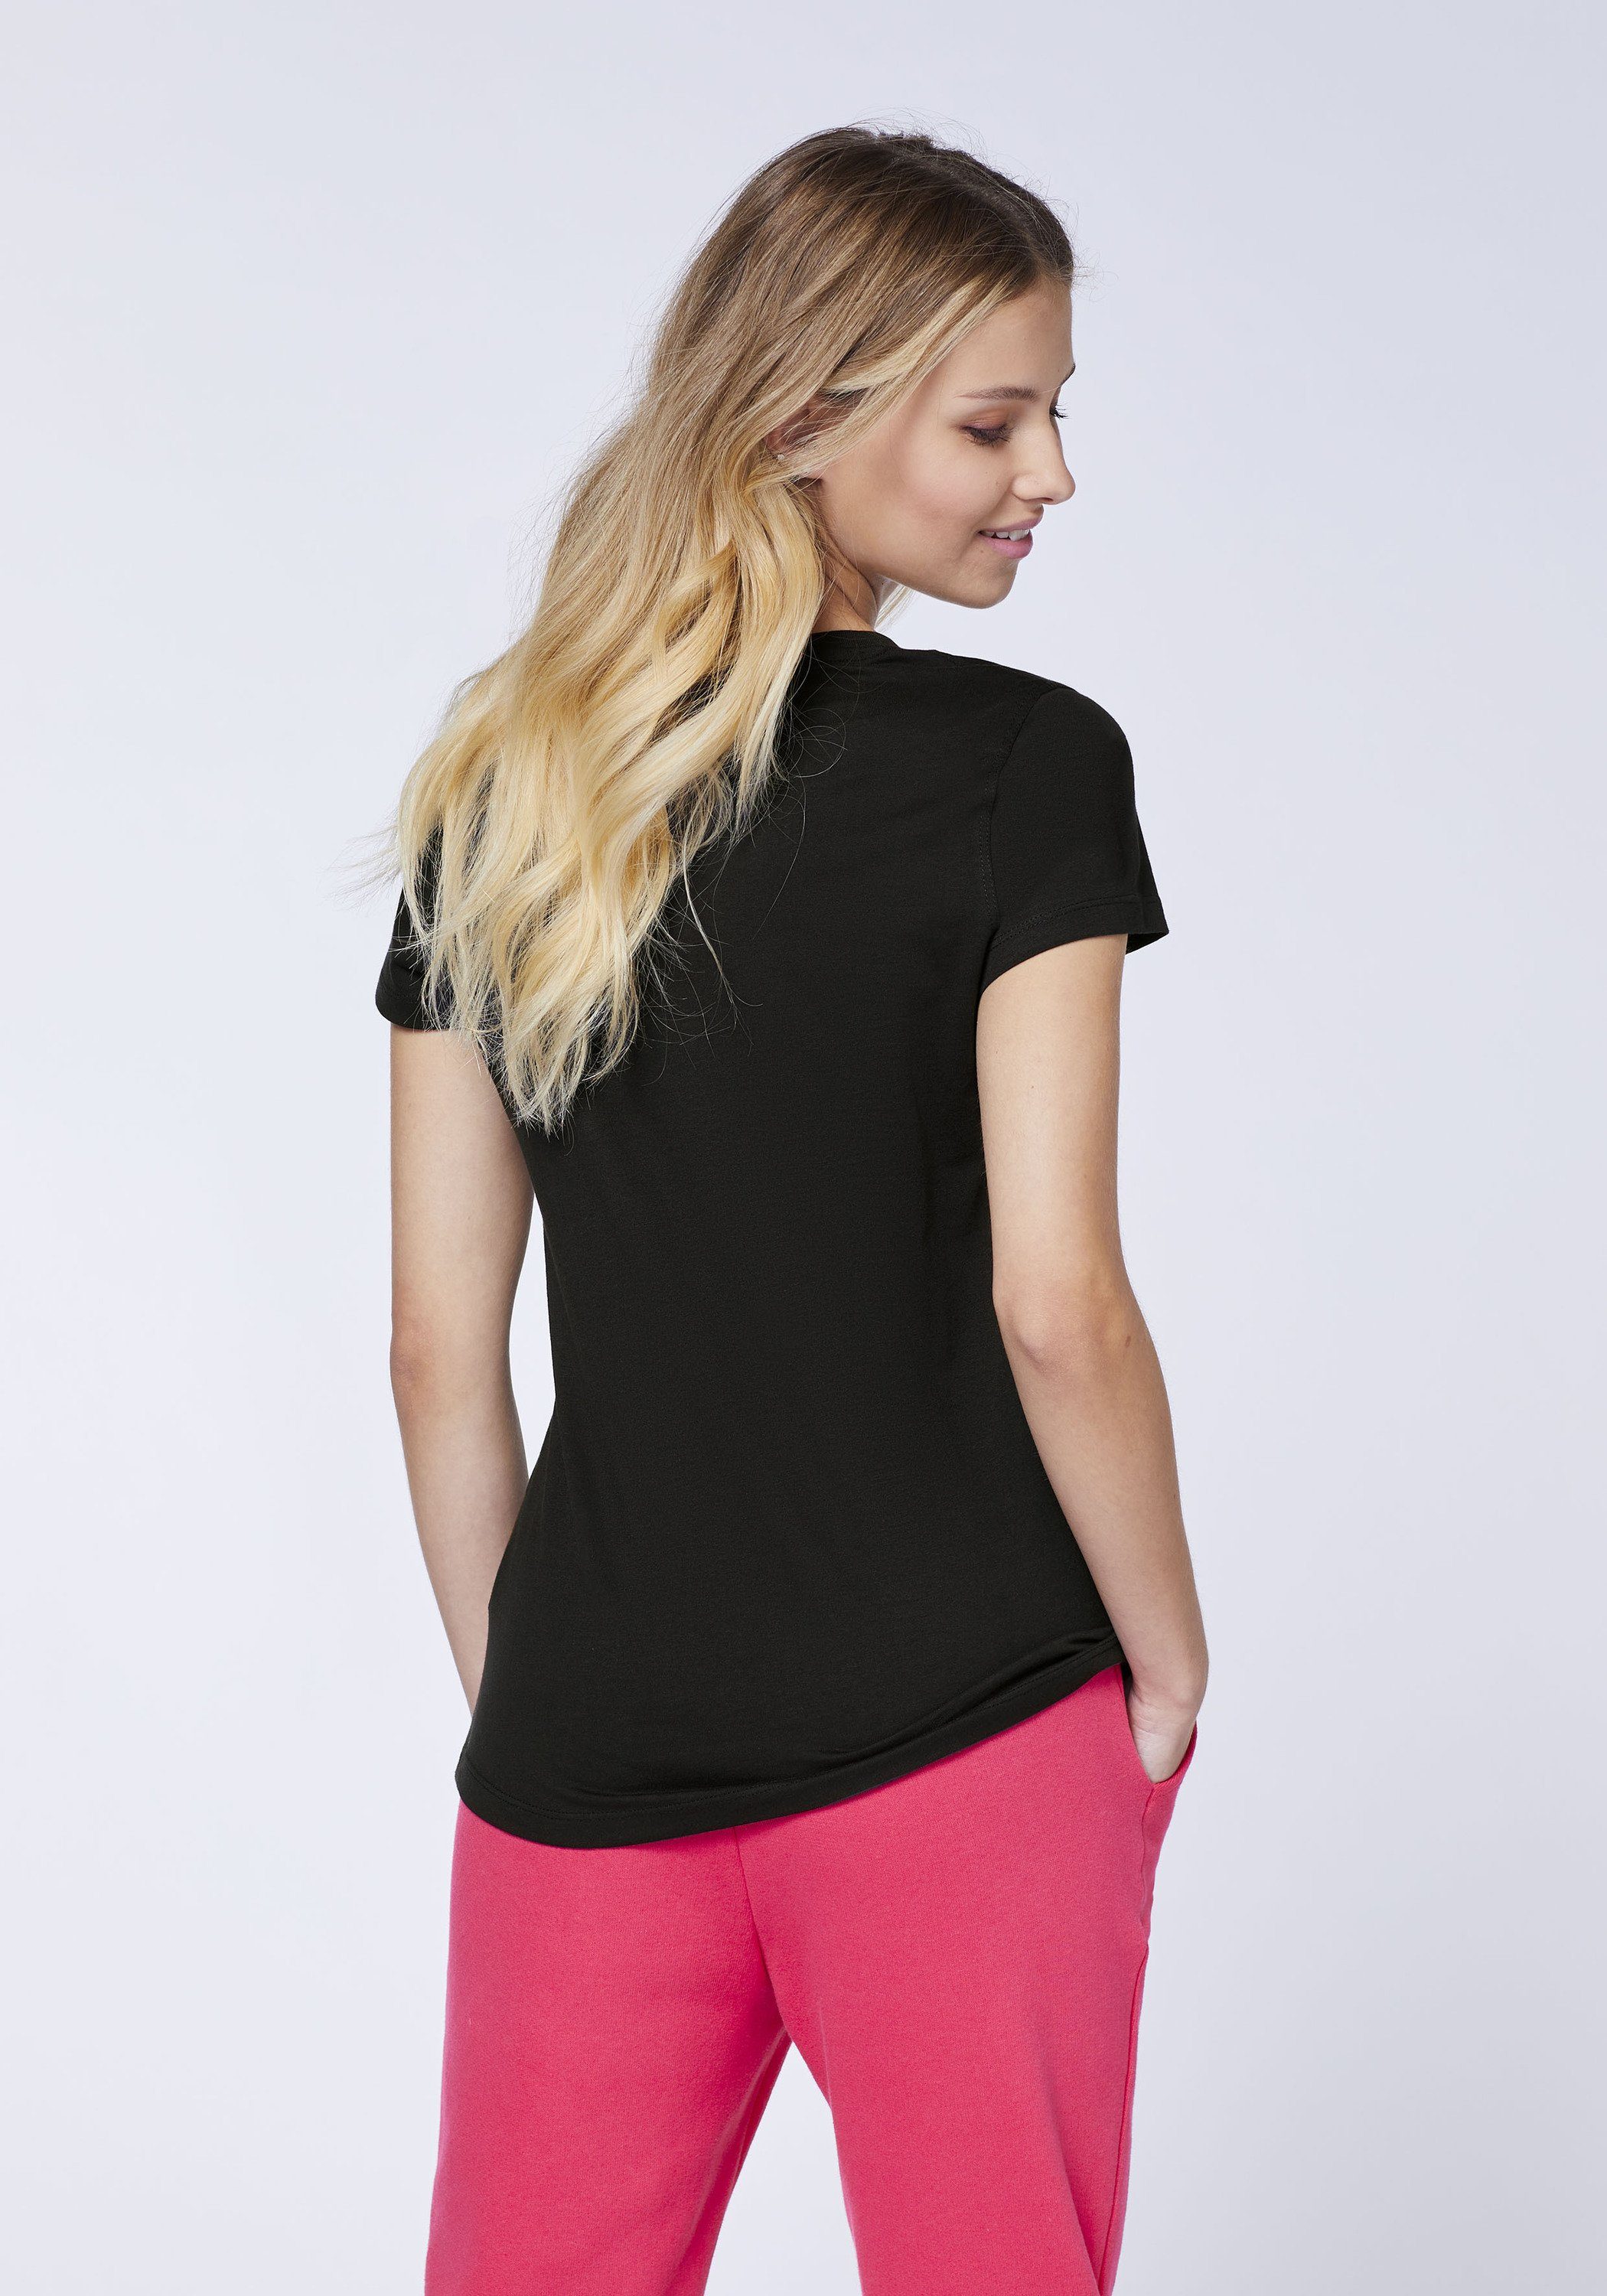 Label-Look Chiemsee Beauty T-Shirt Black 1 19-3911 Print-Shirt im